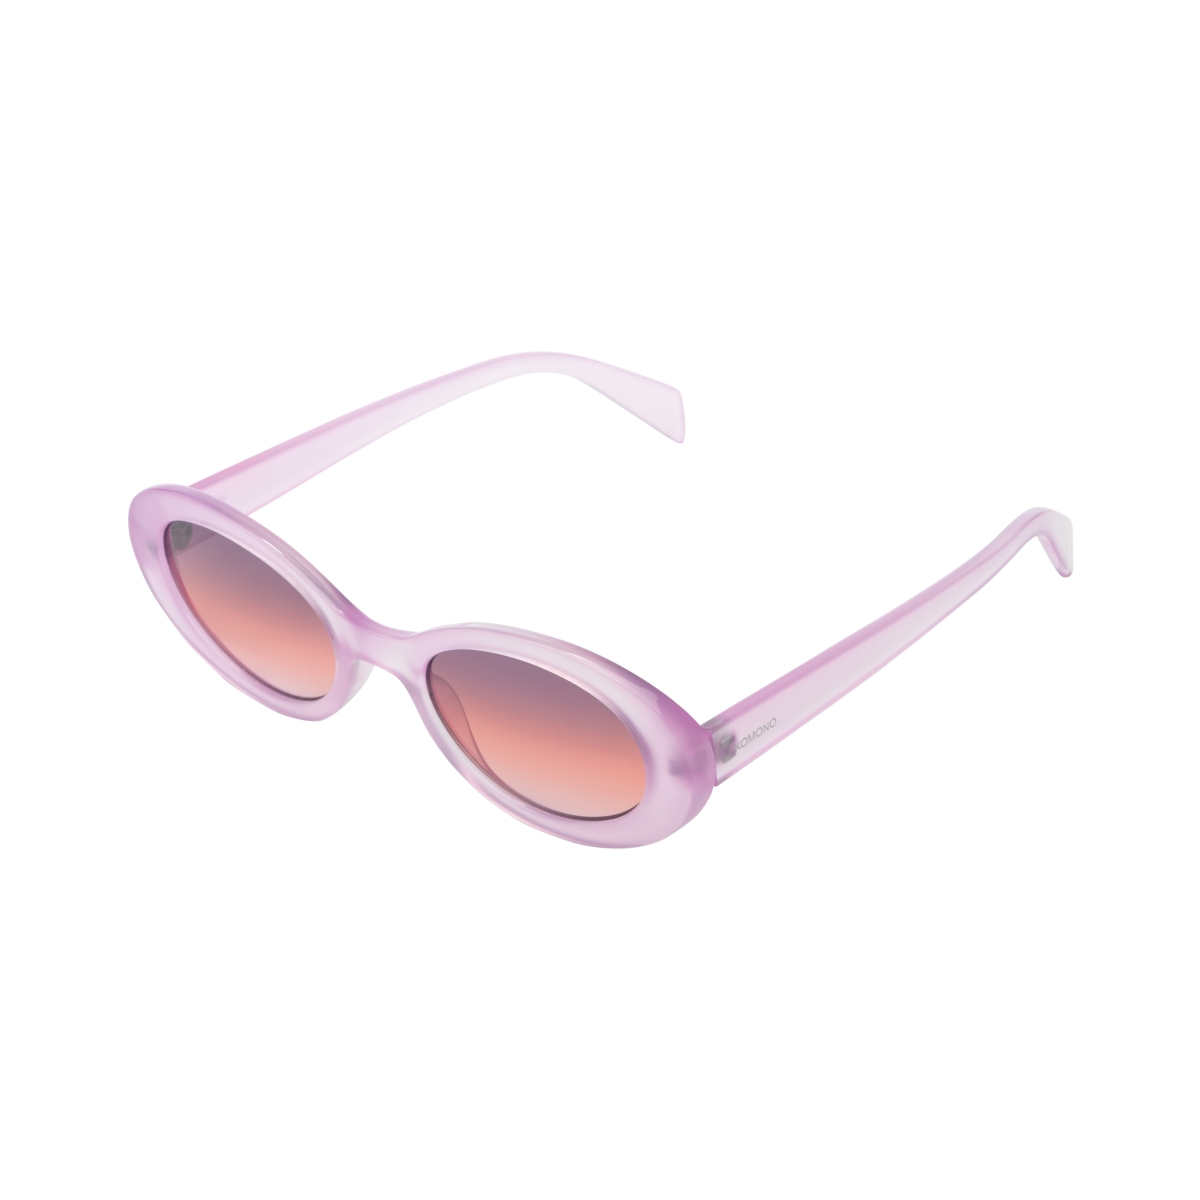 Komono Sunglasses - Οβάλ κοκκάλινα γυαλιά ηλίου - Lilac